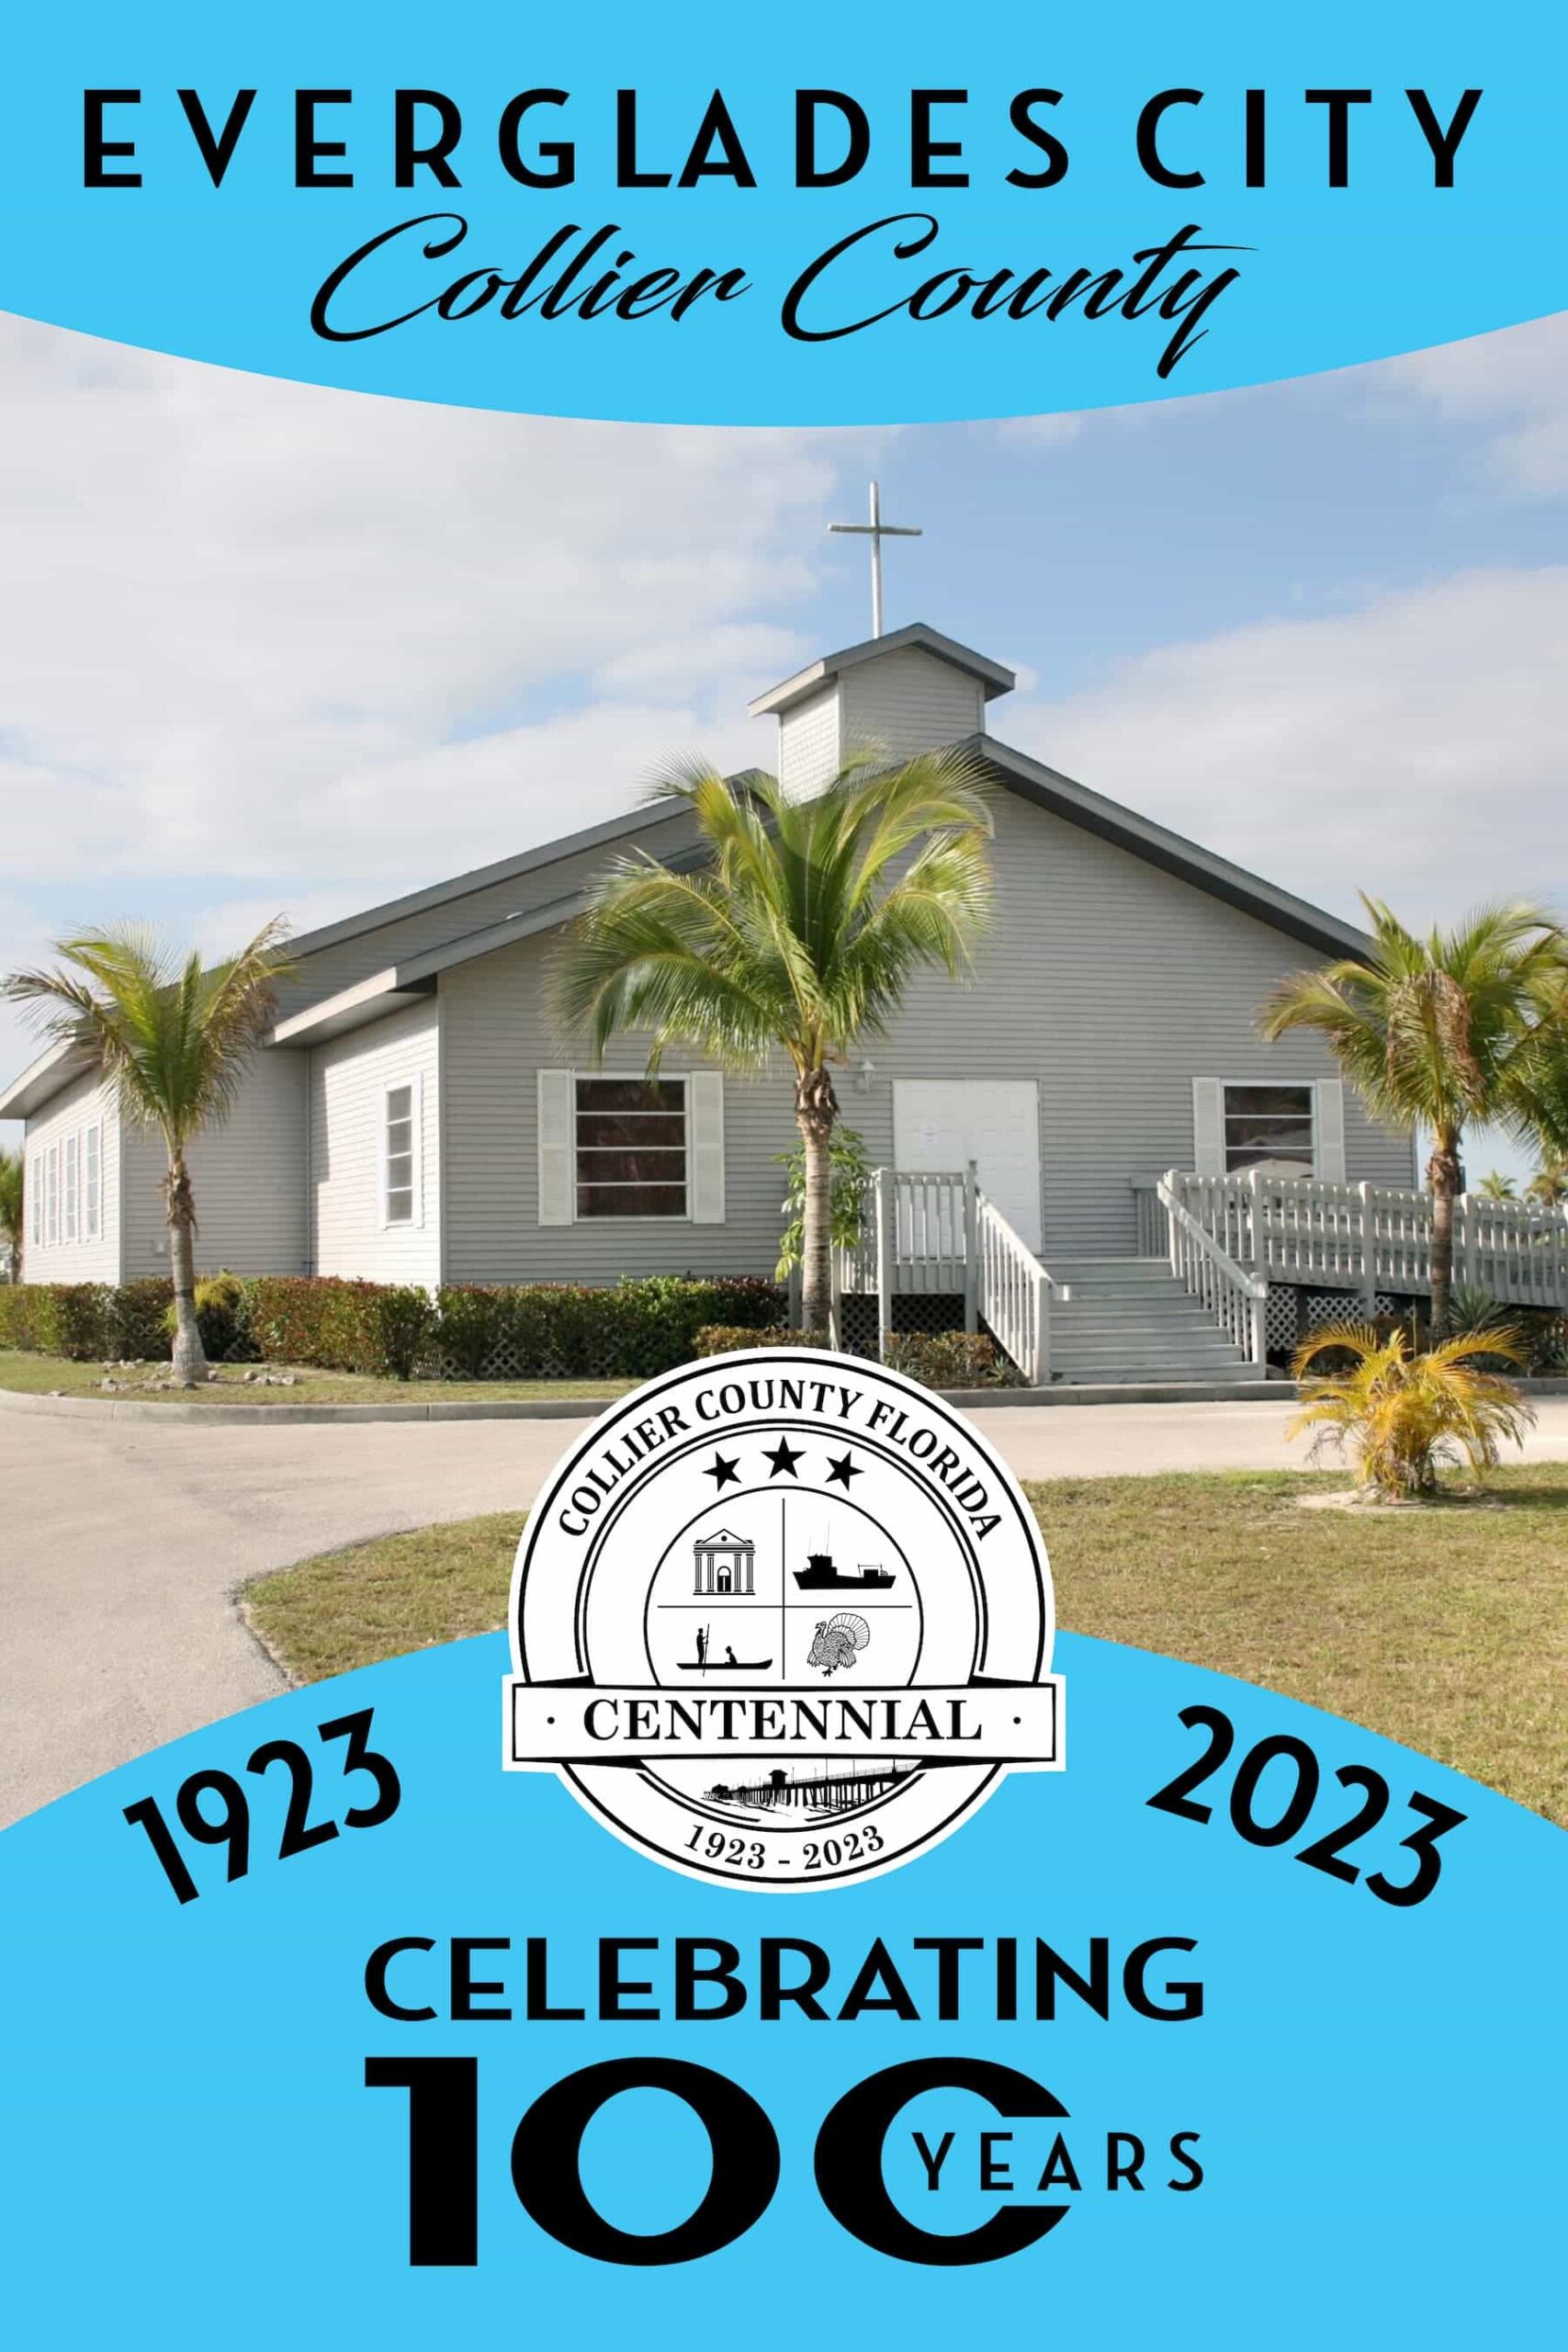 Church image - Celebrating 100 Years